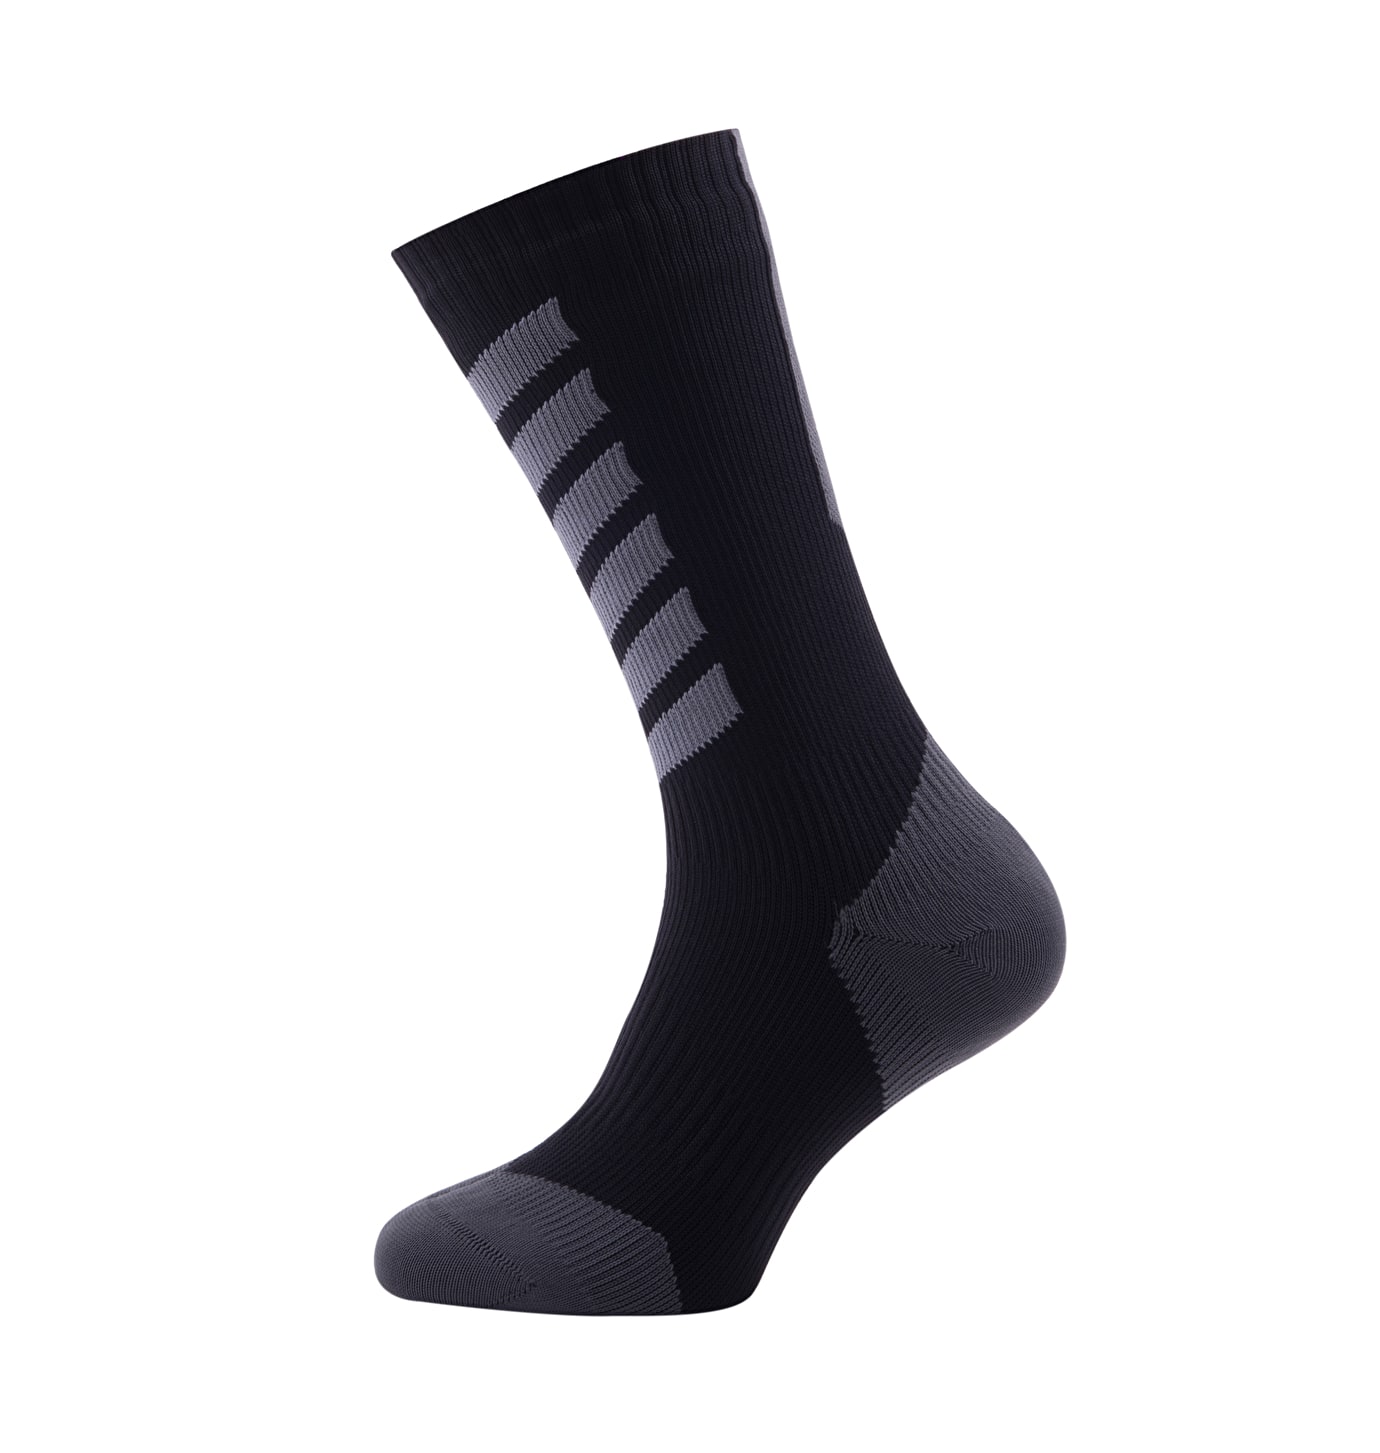 Waterproof Socks Anth Black Charcoal SealSkinz MTB Mid Mid Hydrostop 